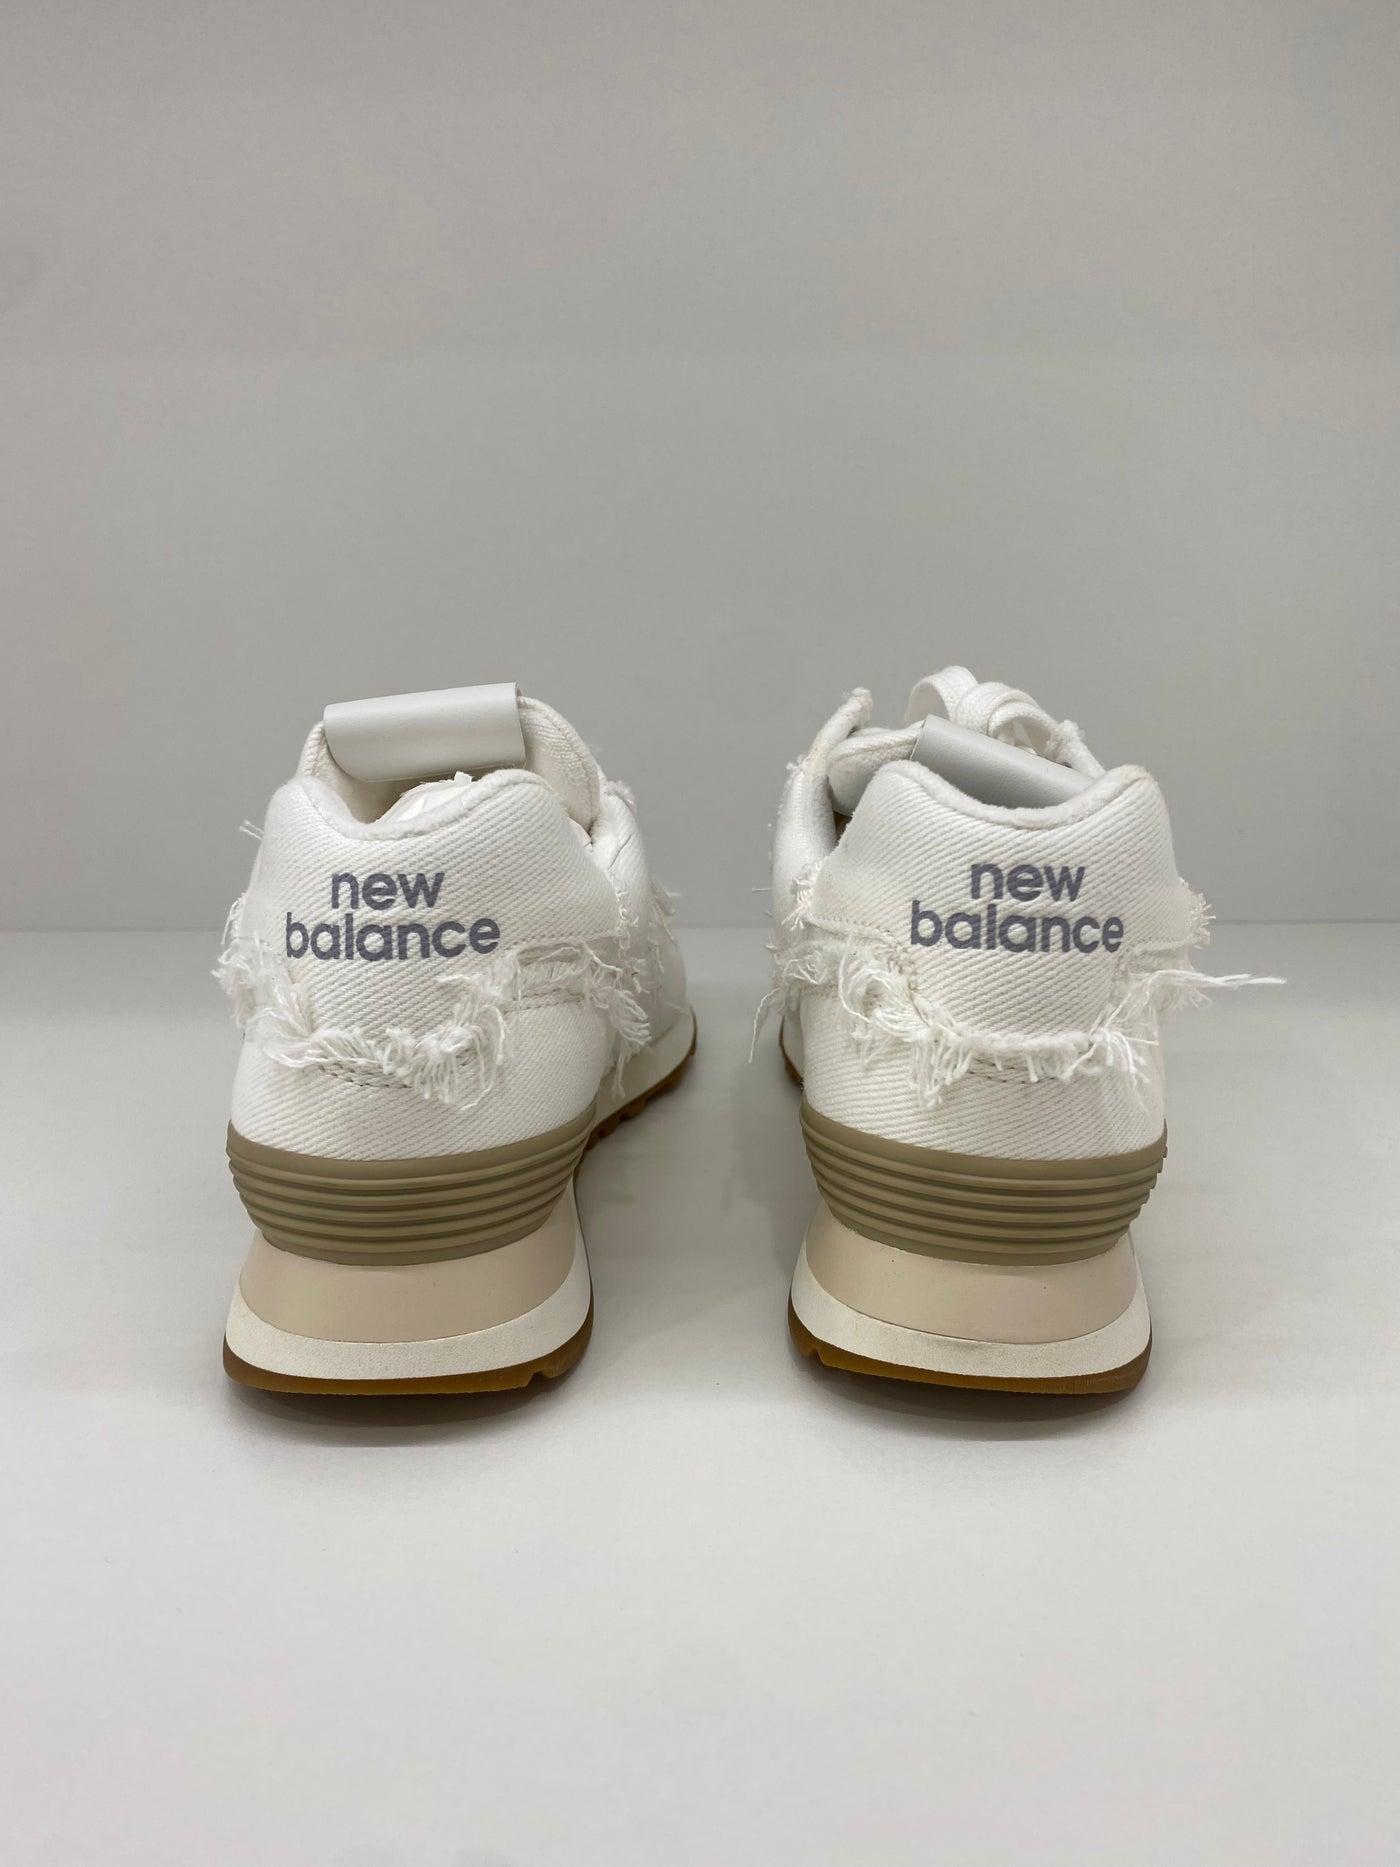 Miu Miu x New Balance White Sneakers - Size 38